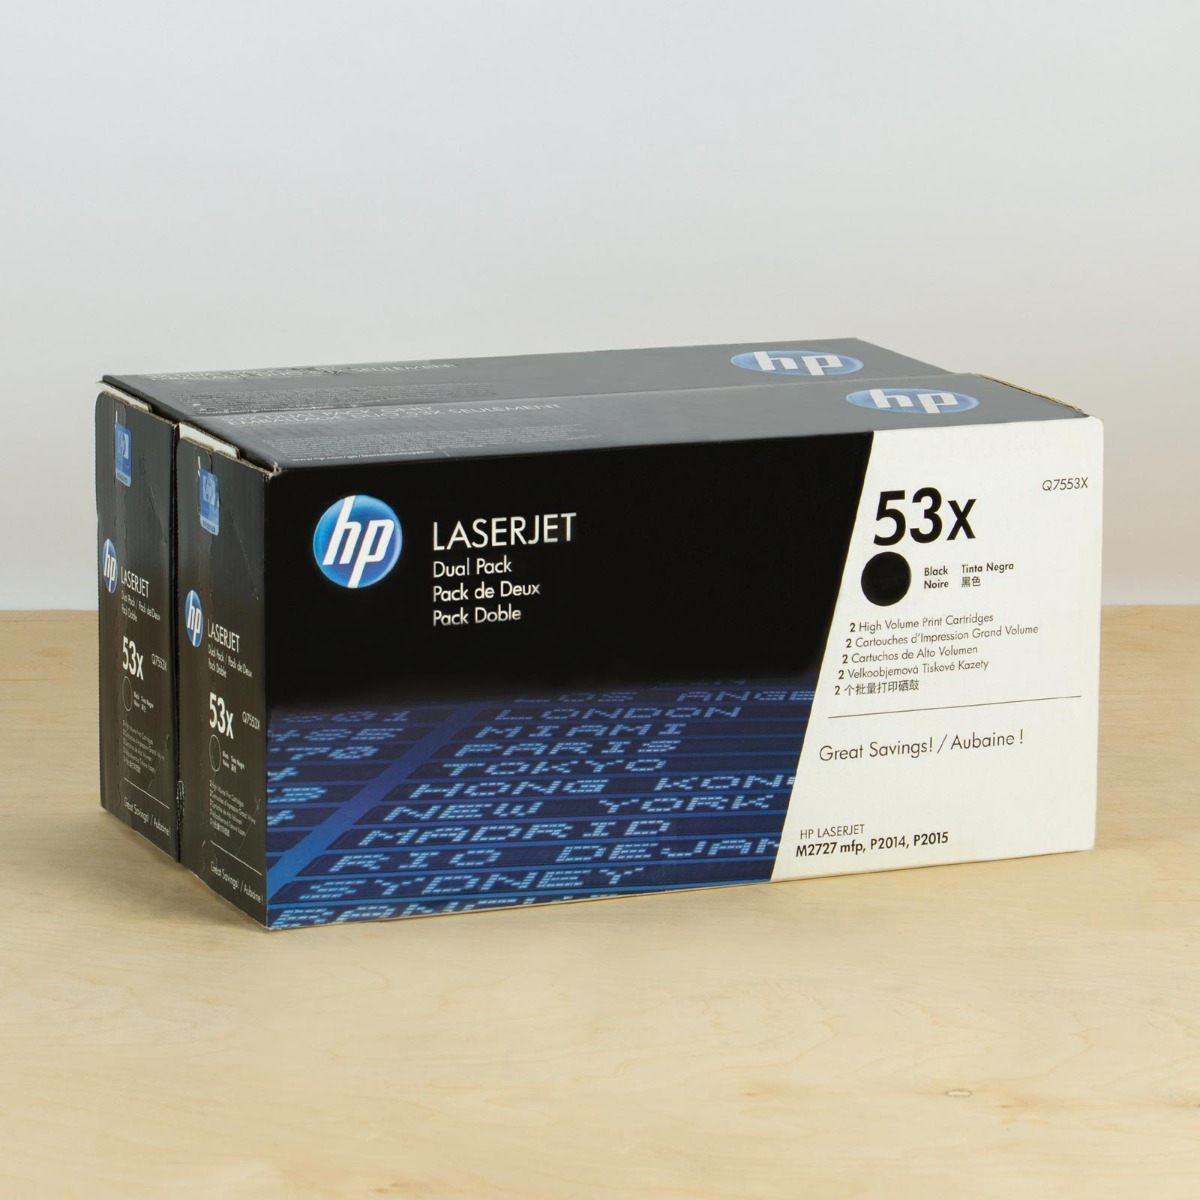 HP Q7553XD